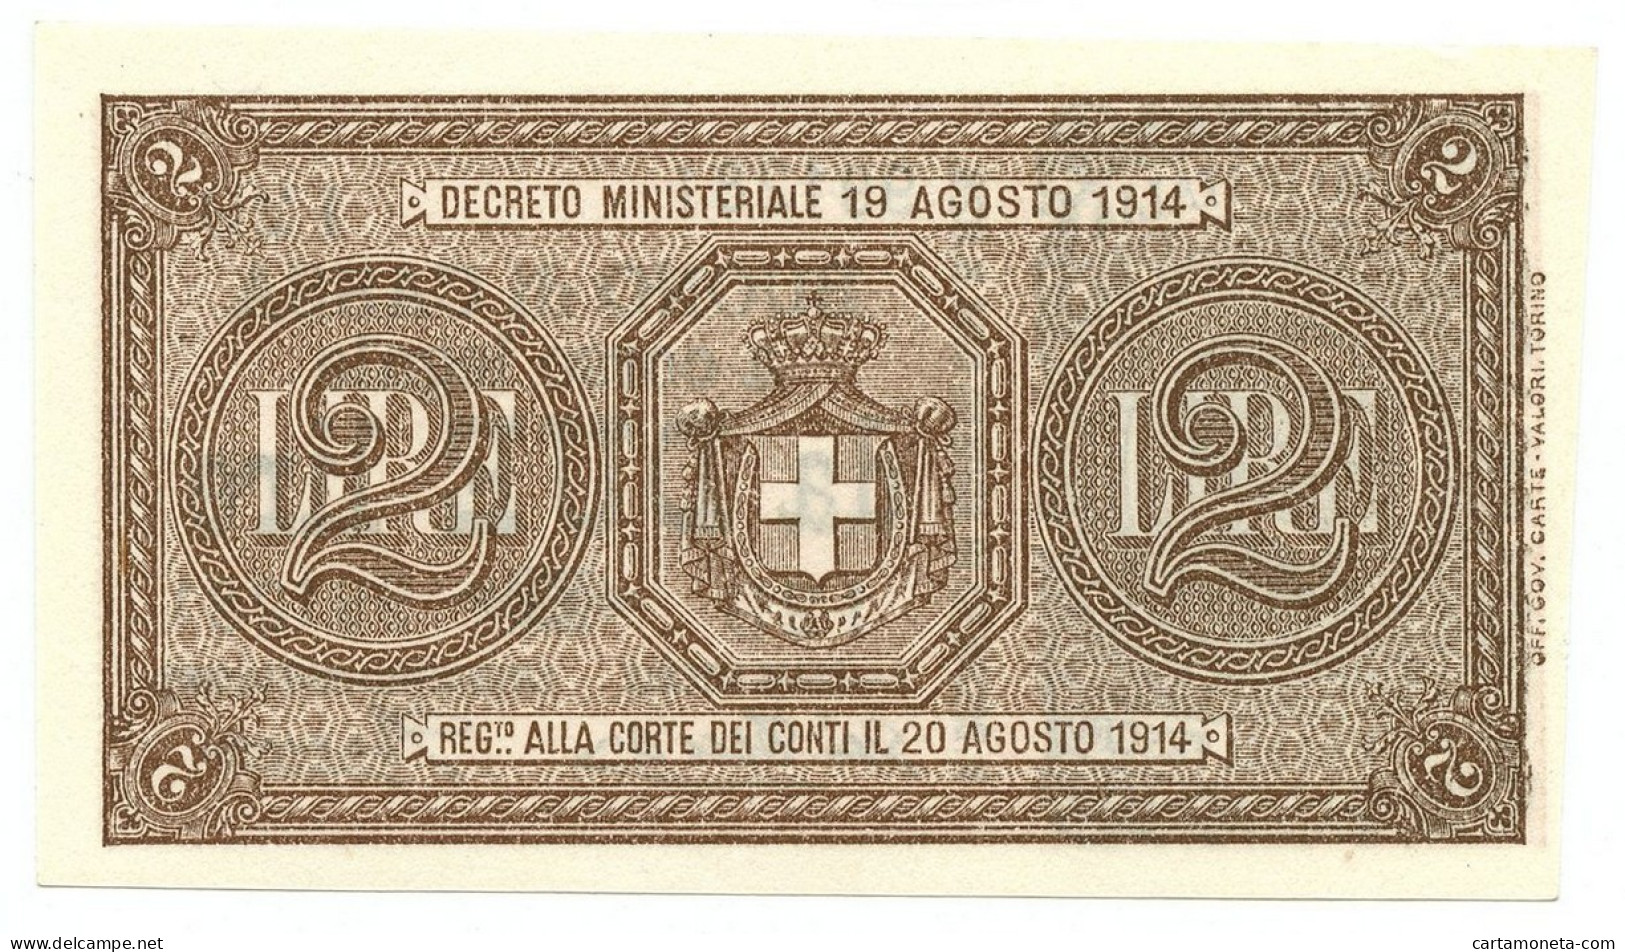 2 LIRE BUONO DI CASSA EFFIGE VITTORIO EMANUELE III 14/03/1920 FDS-/FDS - Otros